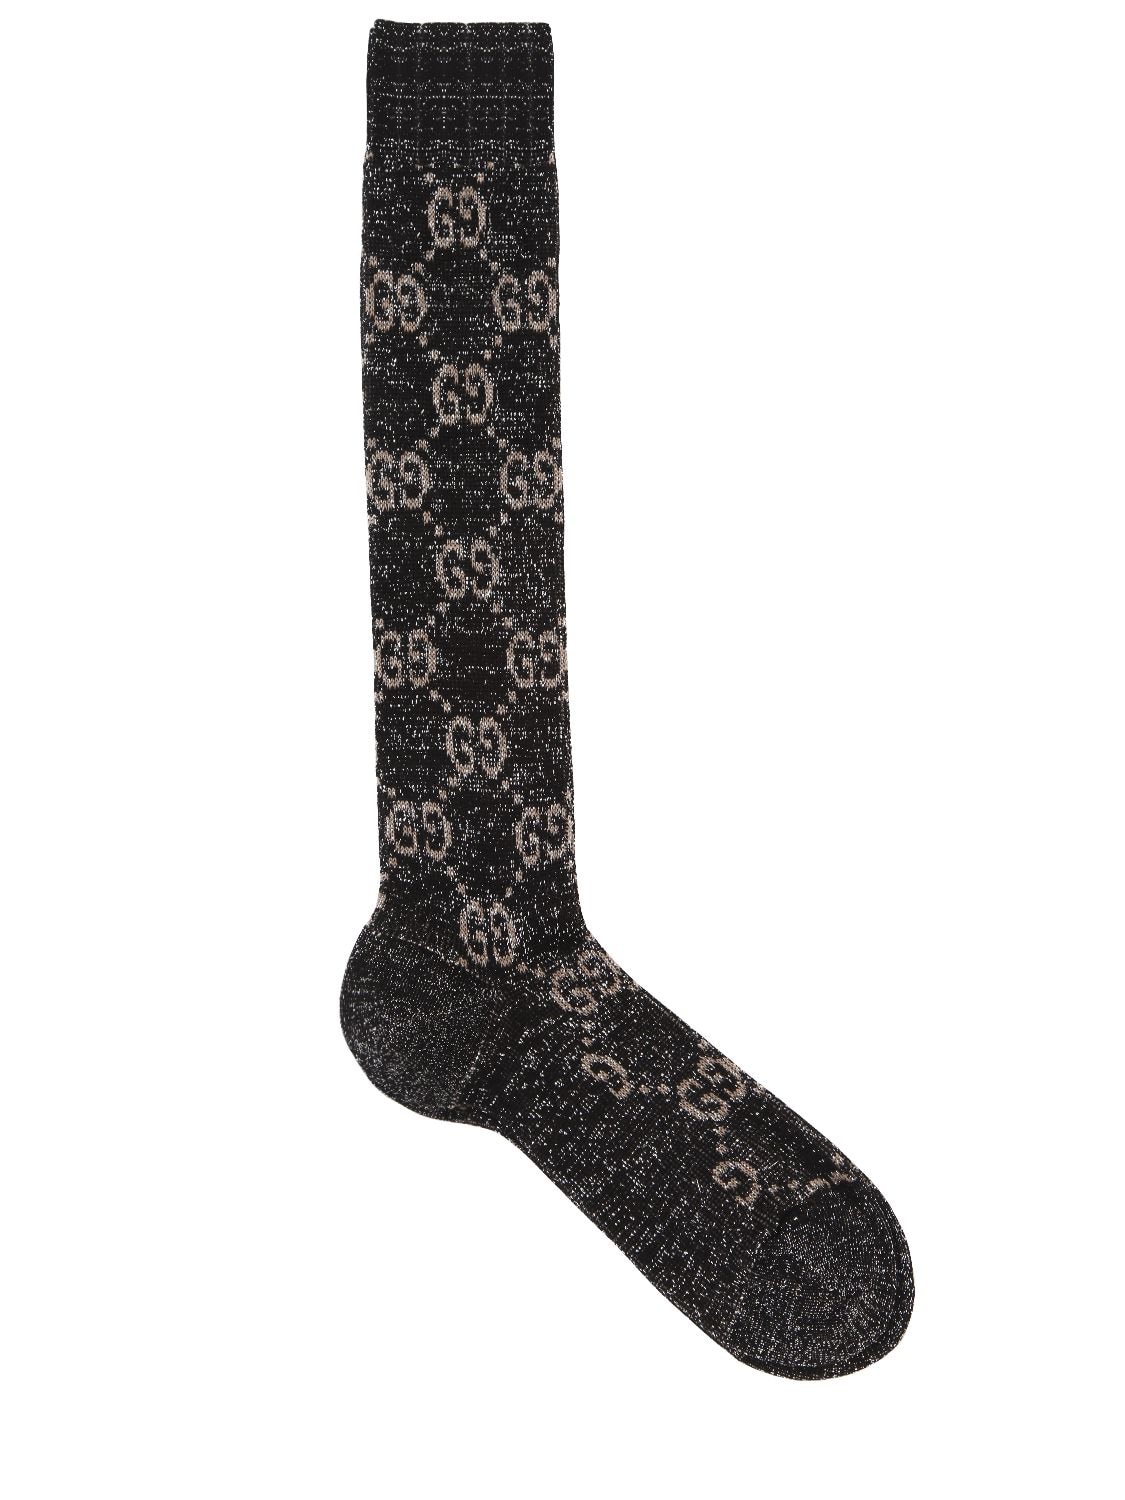 Gucci Gg Supreme Lurex Socks In Black/grey